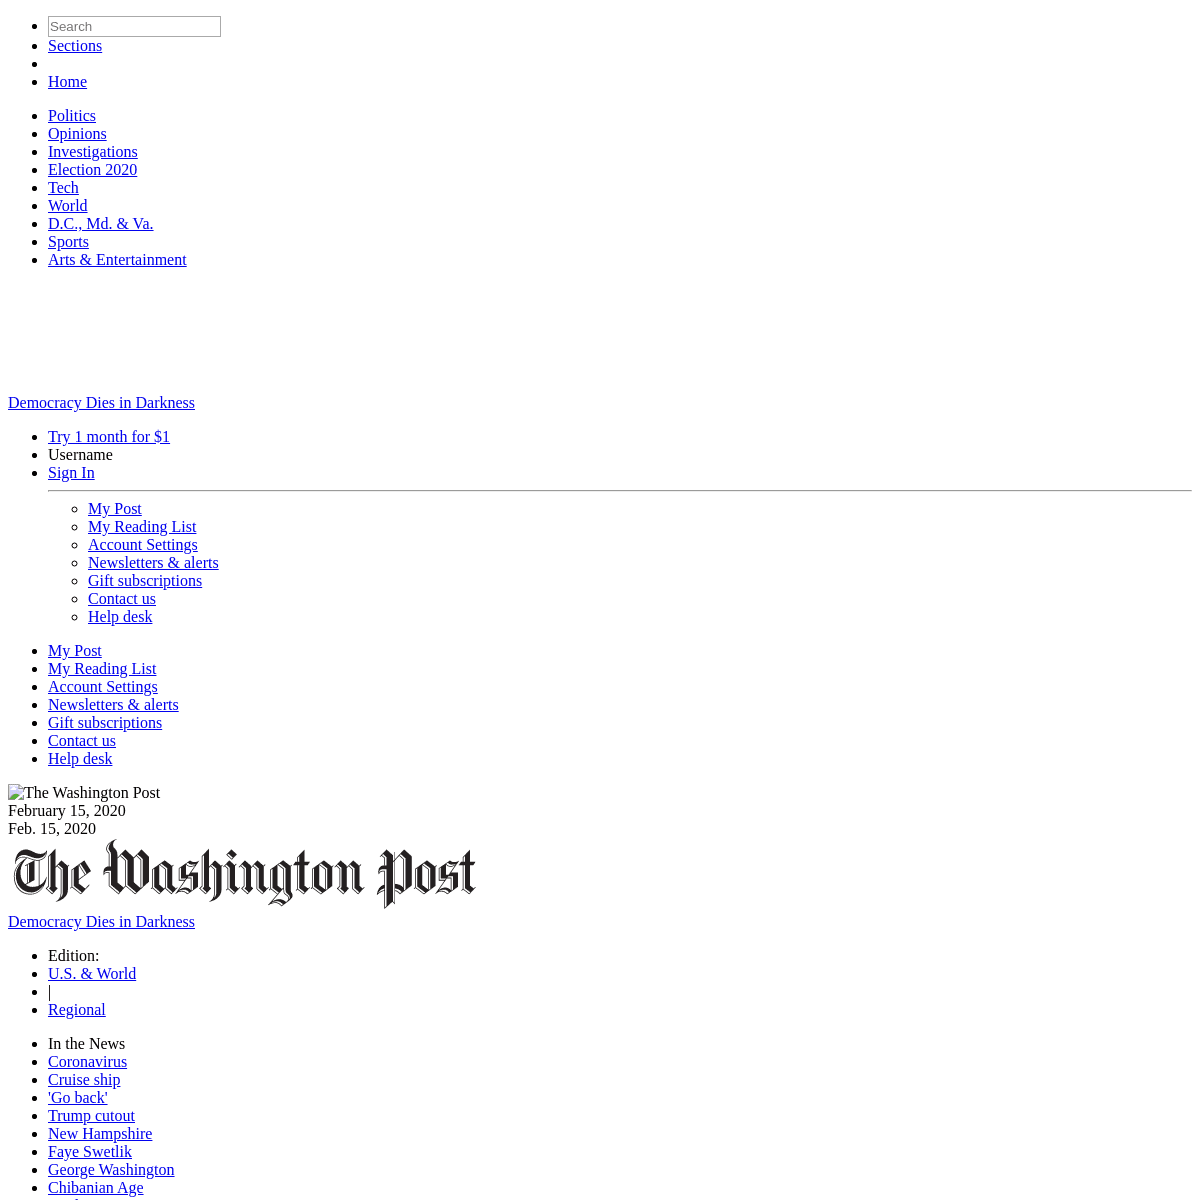 A complete backup of www.washingtonpost.com/politics/2020/02/13/challenge-joe-bidens-message-black-voters-holding/